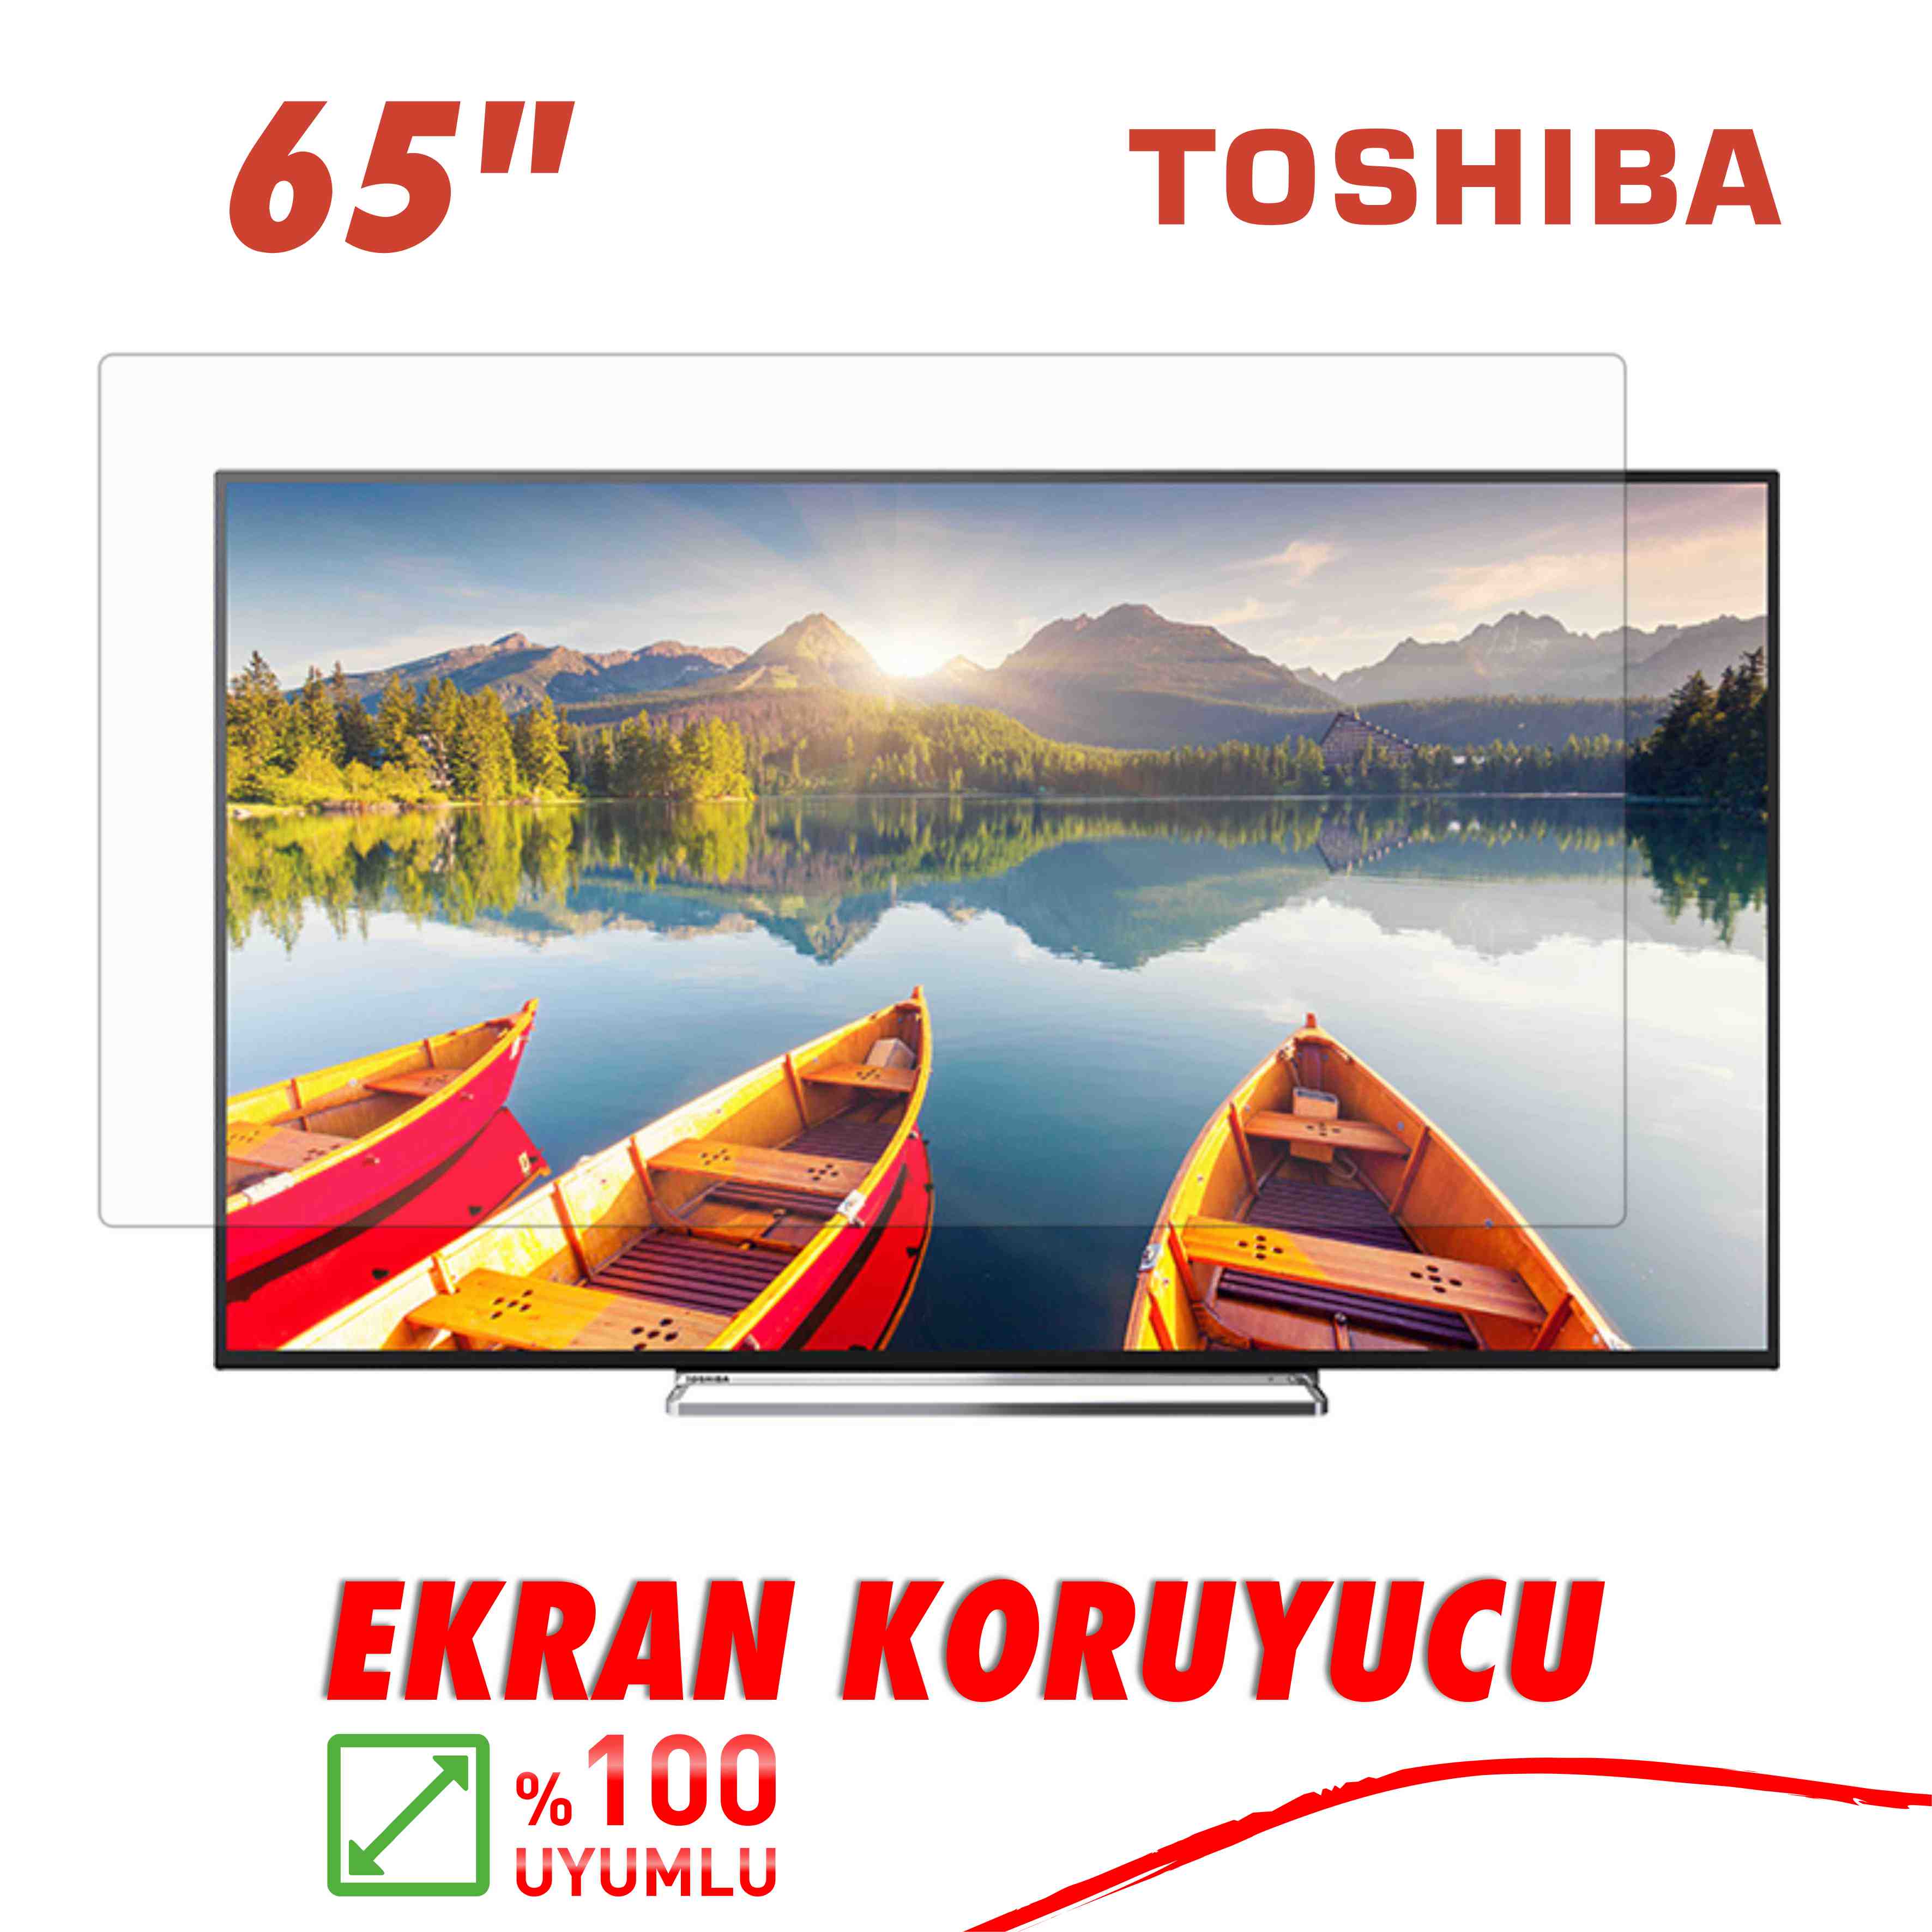 TOSHIBA 65" INC 165 EKRAN TV EKRAN KORUYUCU / TV GUARD